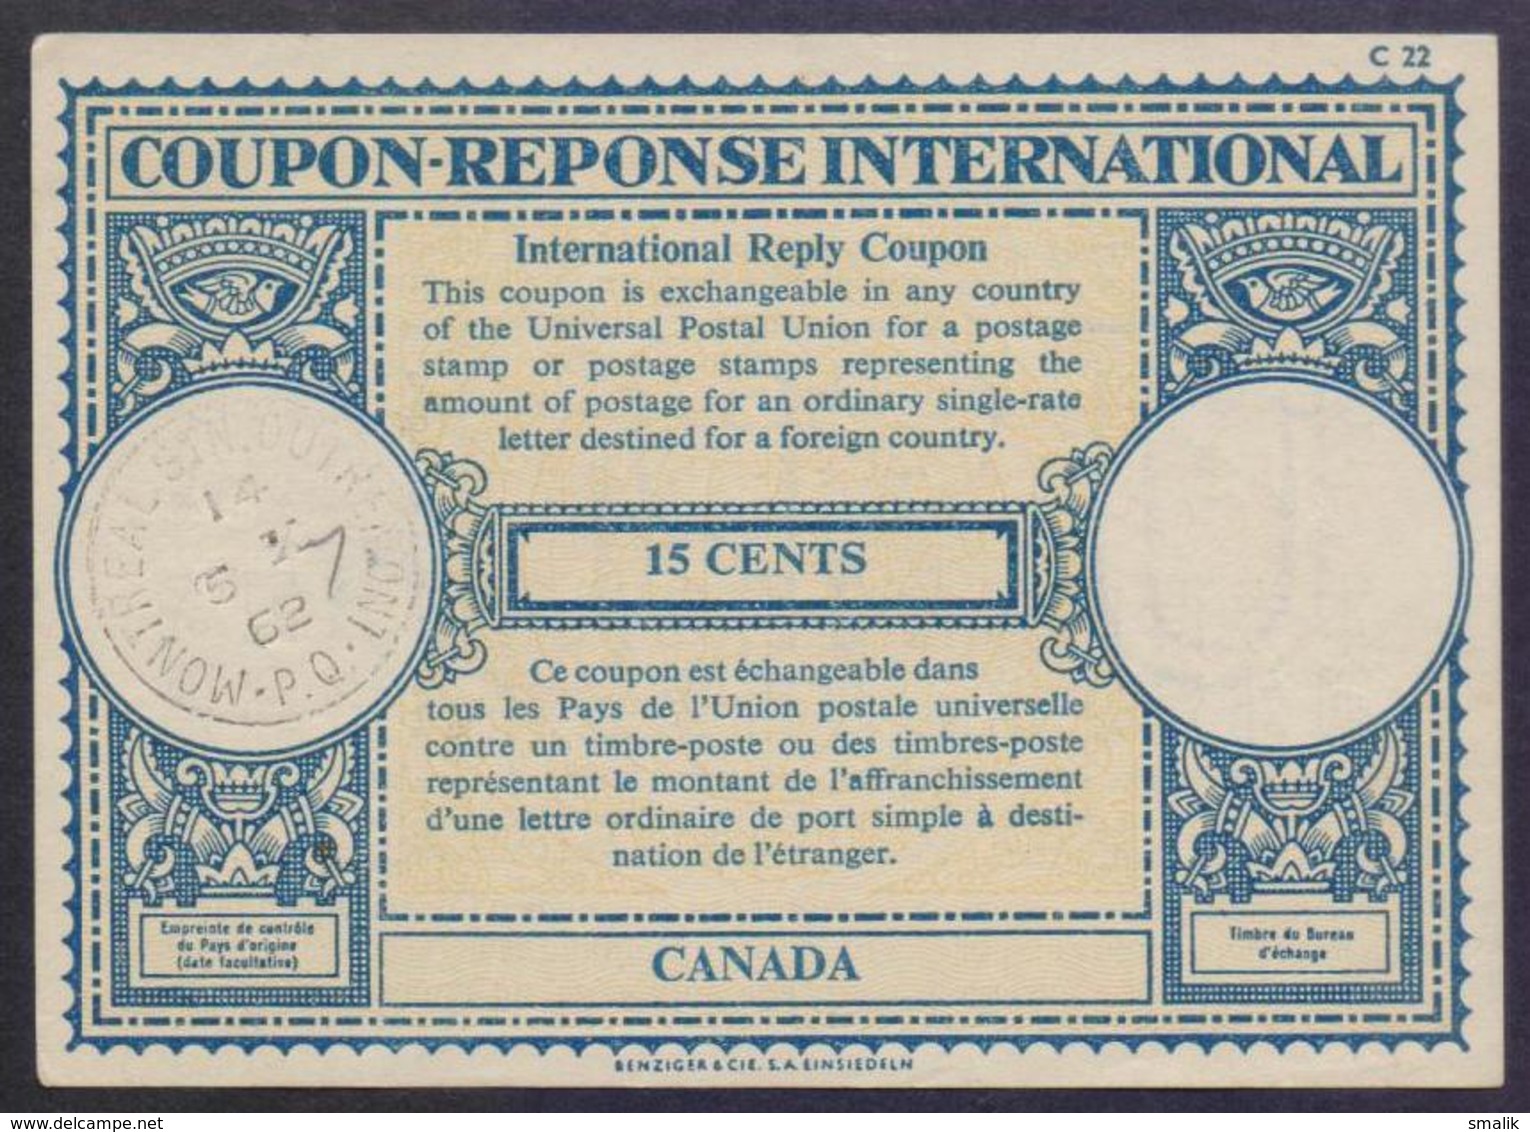 CANADA - 15 Cents London Type IRC COUPON REPONSE INTERNATIONAL REPLY, UPU, Cancelled 5.10. 1962 - Buoni Risposta Internazionali (Coupon)